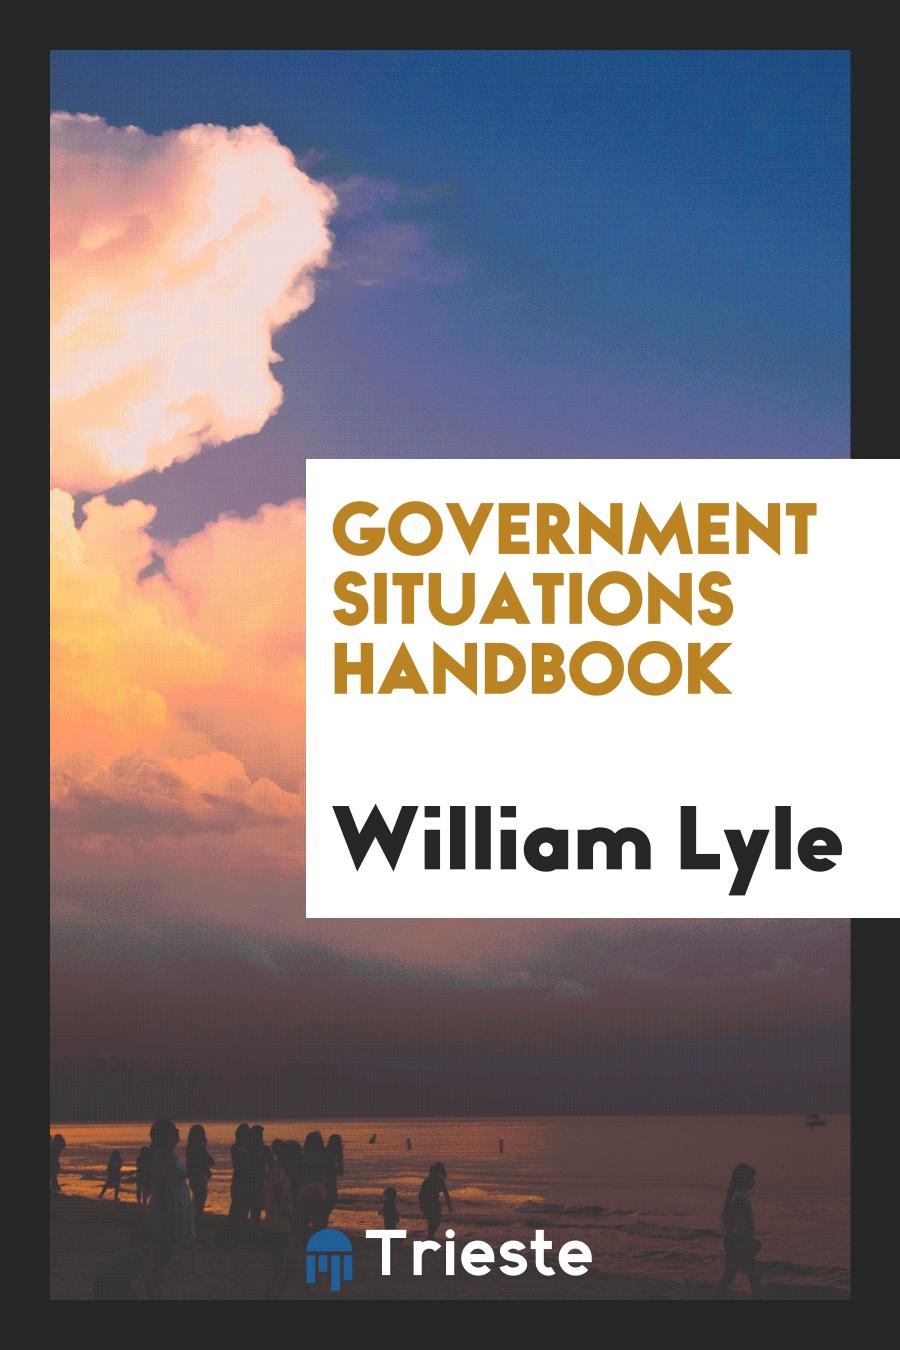 Government situations handbook